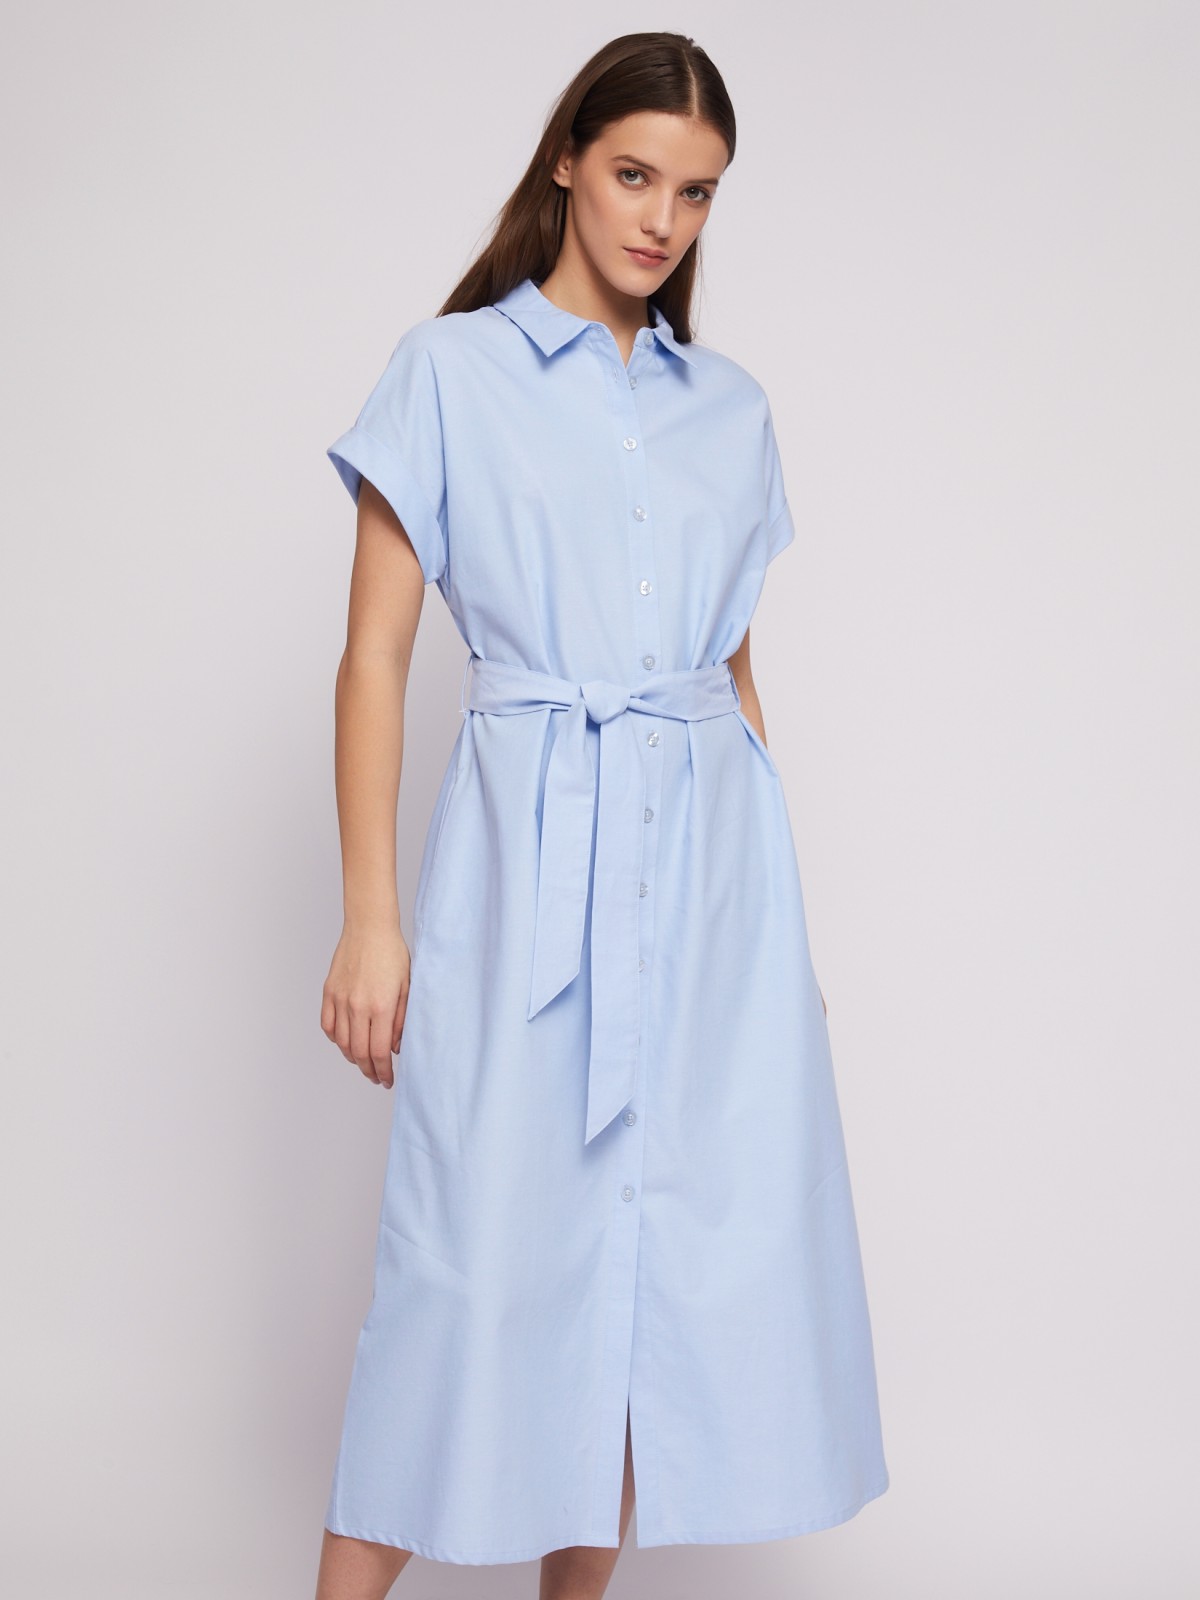 Платье-рубашка из хлопка с коротким рукавом и поясом zolla 024218262353, цвет светло-голубой, размер XS